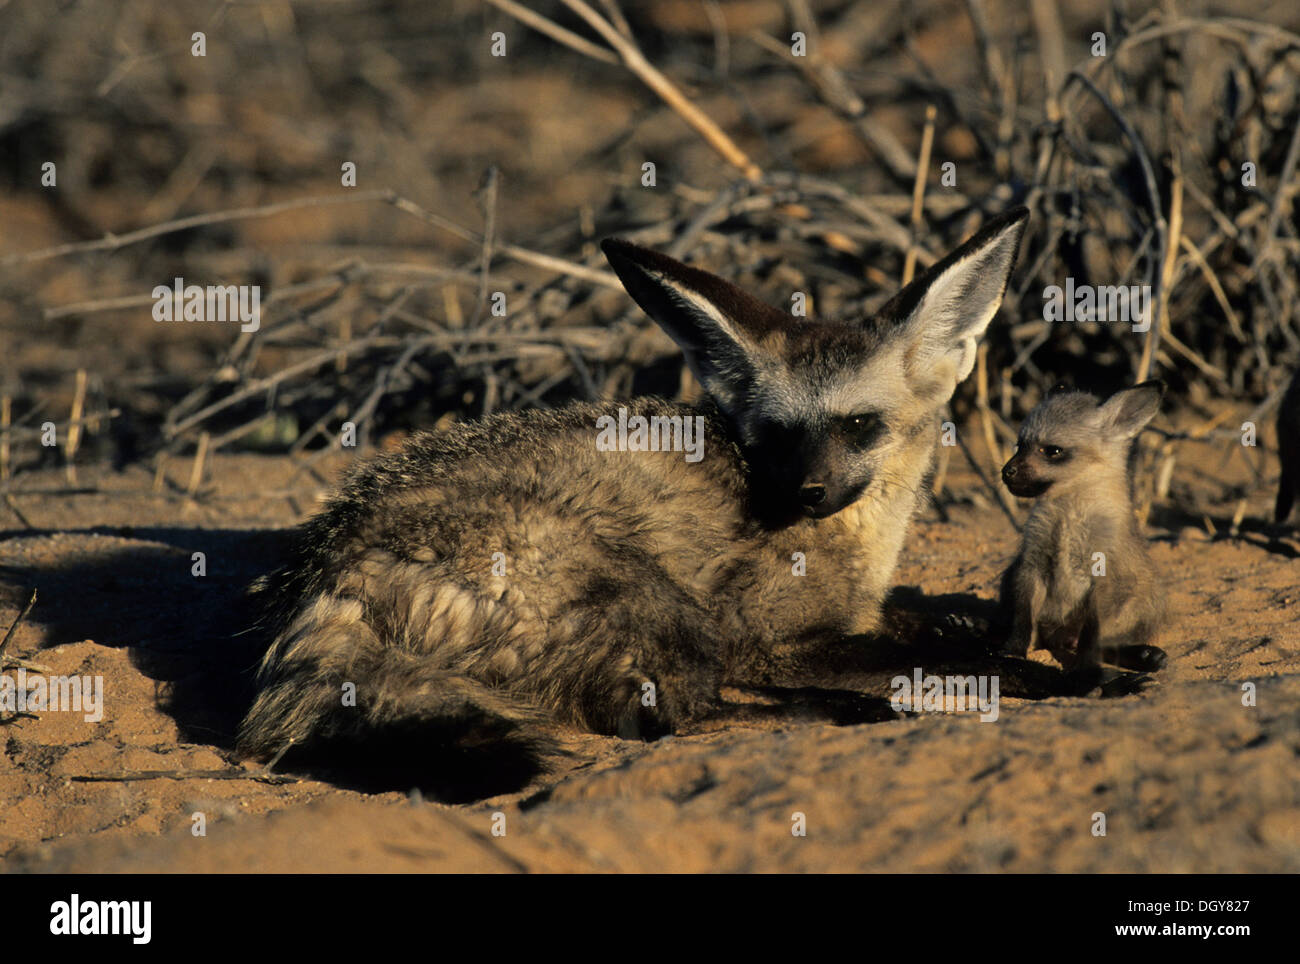 Bat-eared Fox (Otocyon megalotis), female adult and cub, Kgalagadi Transfrontier Park, Kalahari, South Africa, Africa Stock Photo